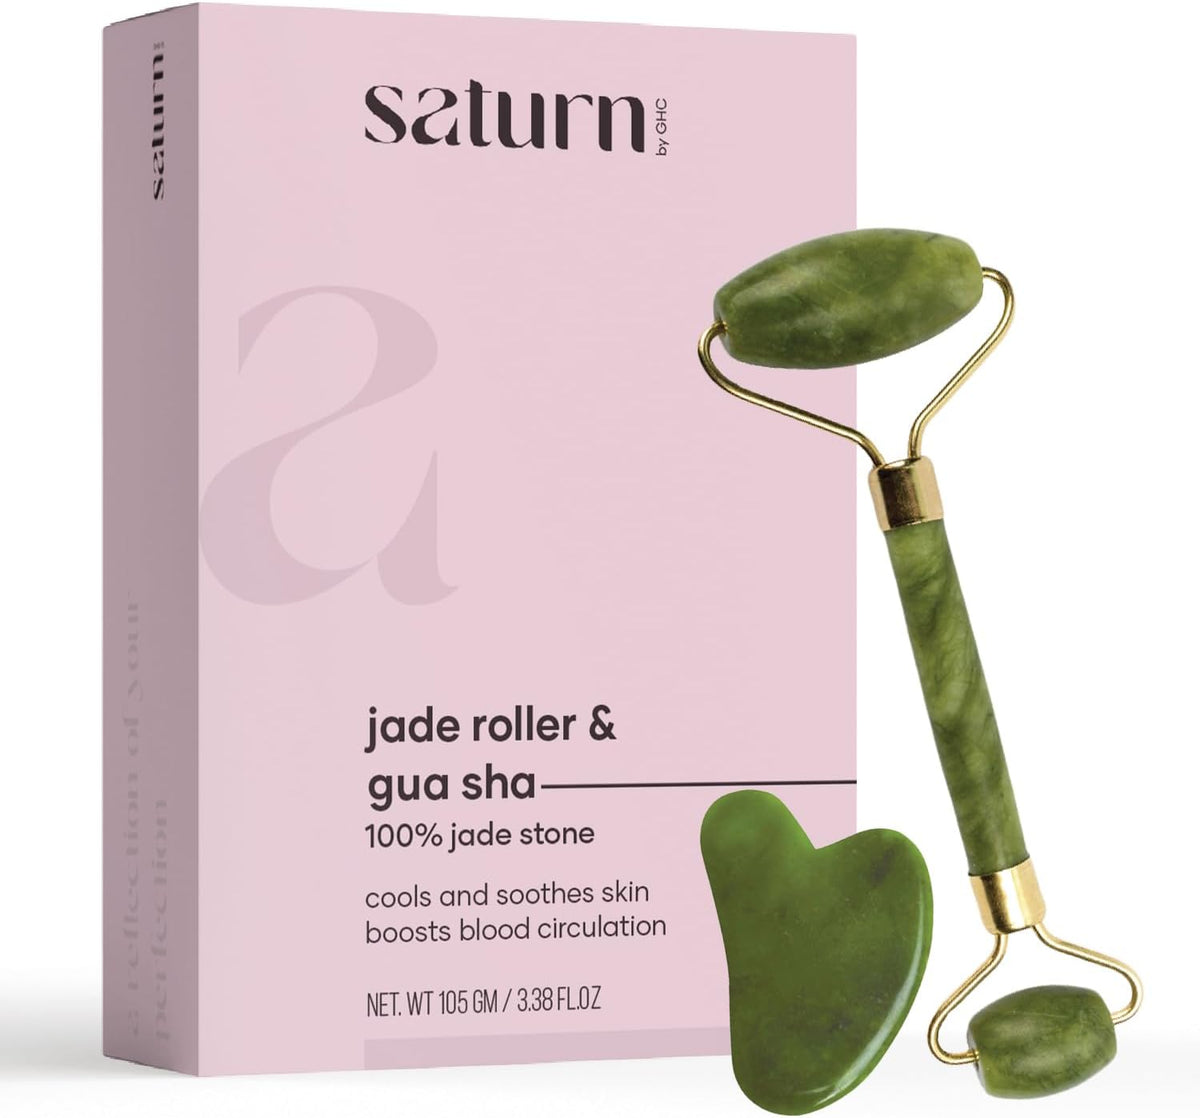 GHC Saturn Jade roller & gua sha 105 gm